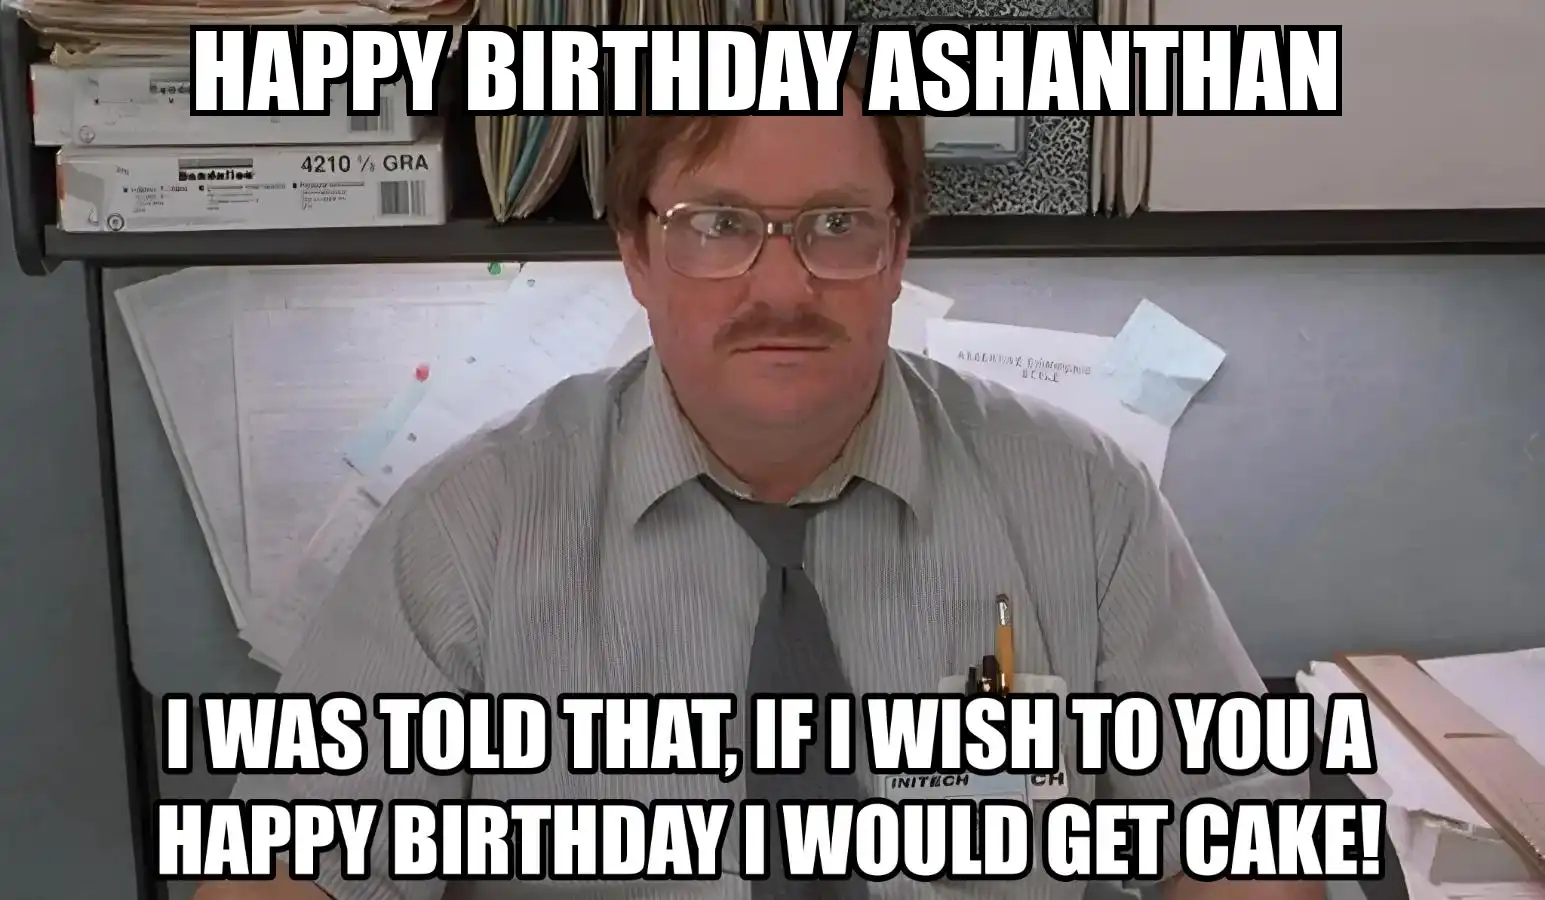 Happy Birthday Ashanthan I Would Get A Cake Meme